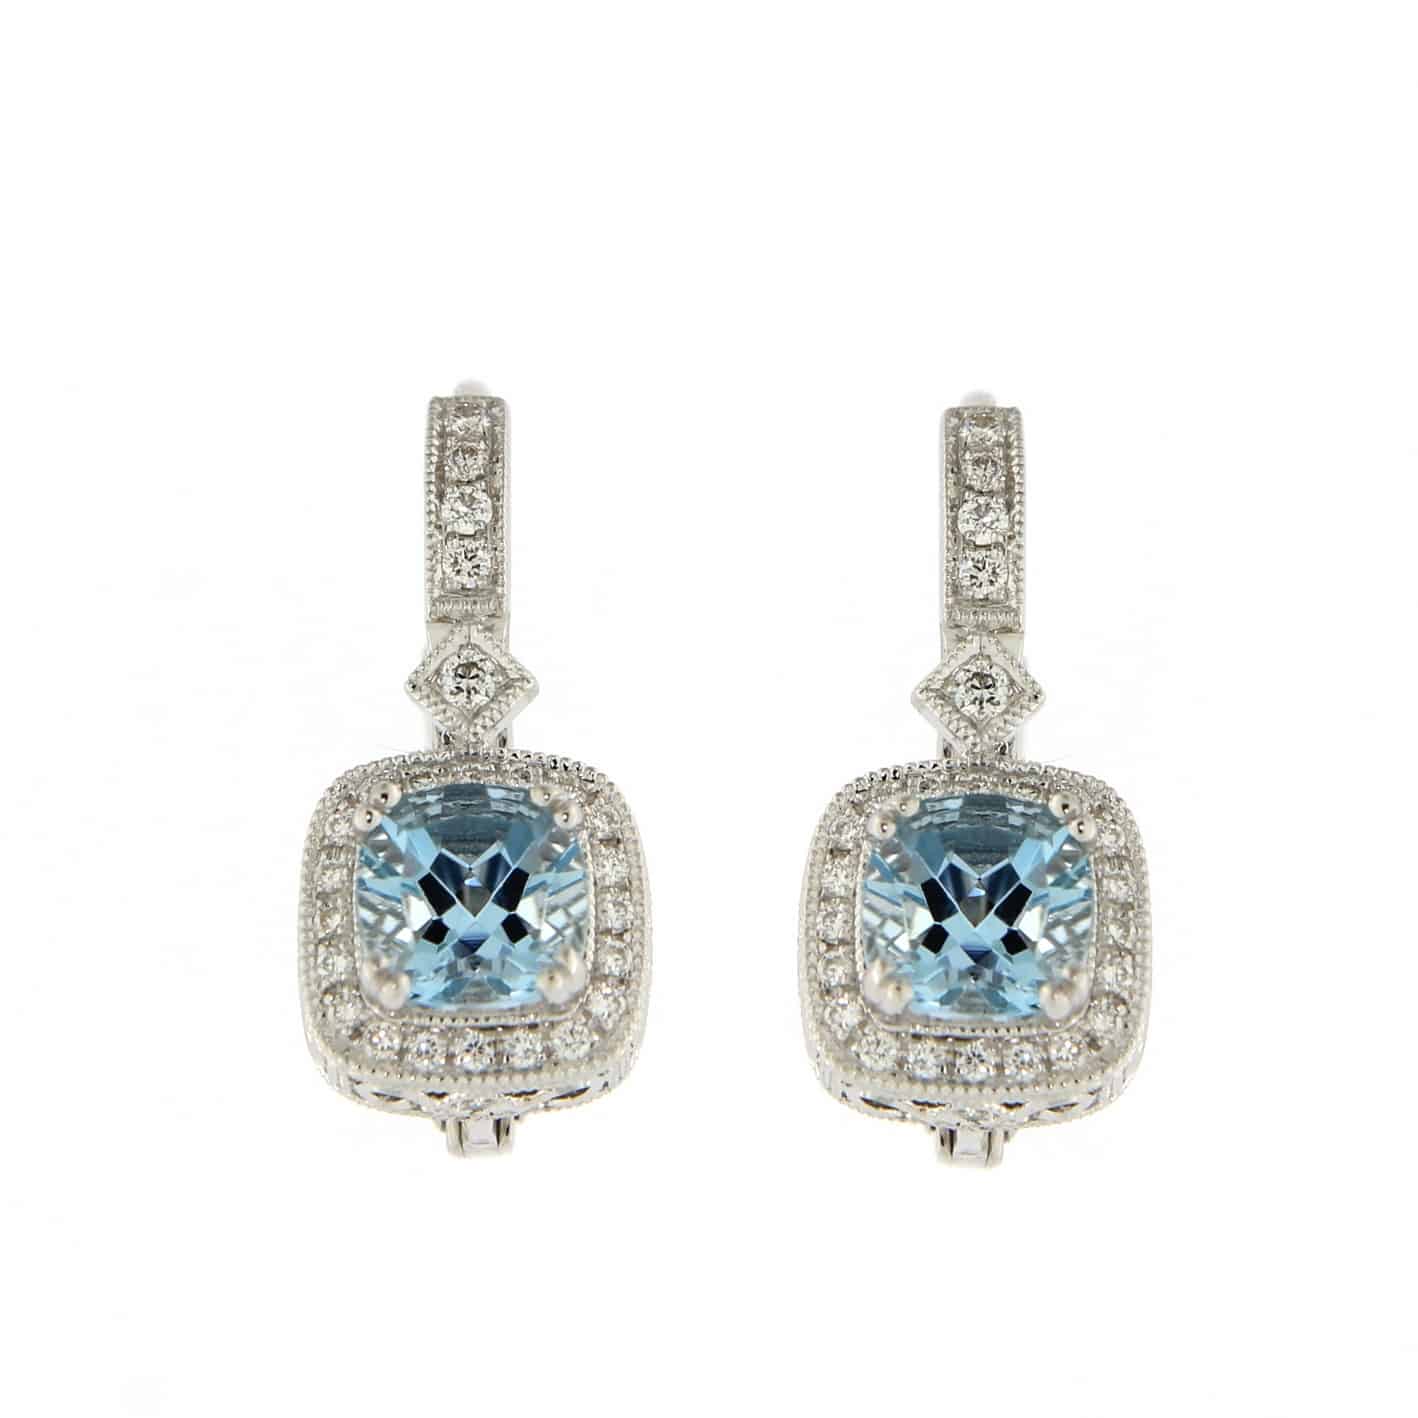 Buy 18ct white gold diamond & aquamarine earrings